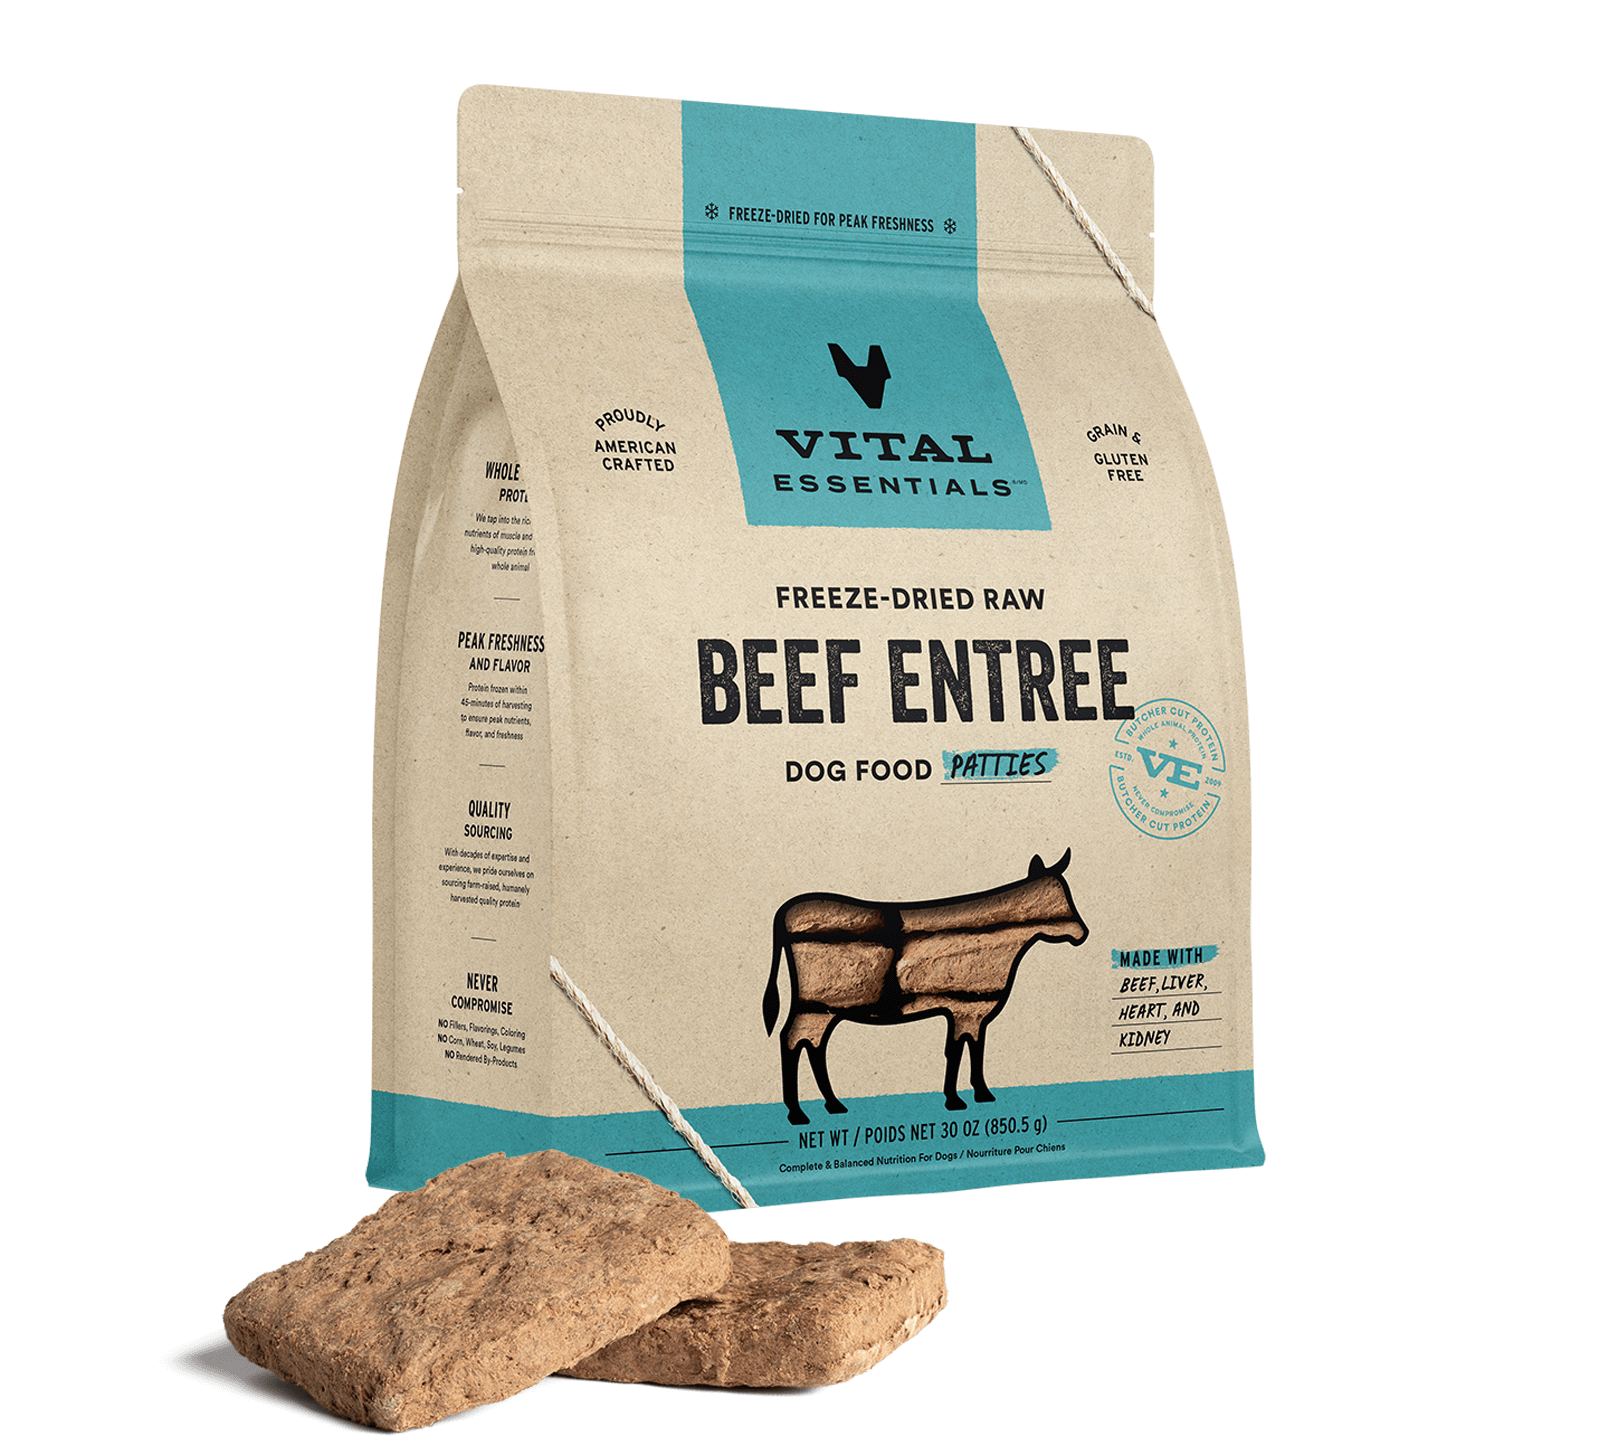 Vital Essentials Freeze-Dried Raw Beef Entree Dog Food Patties, 30 oz - Healing/First Aid